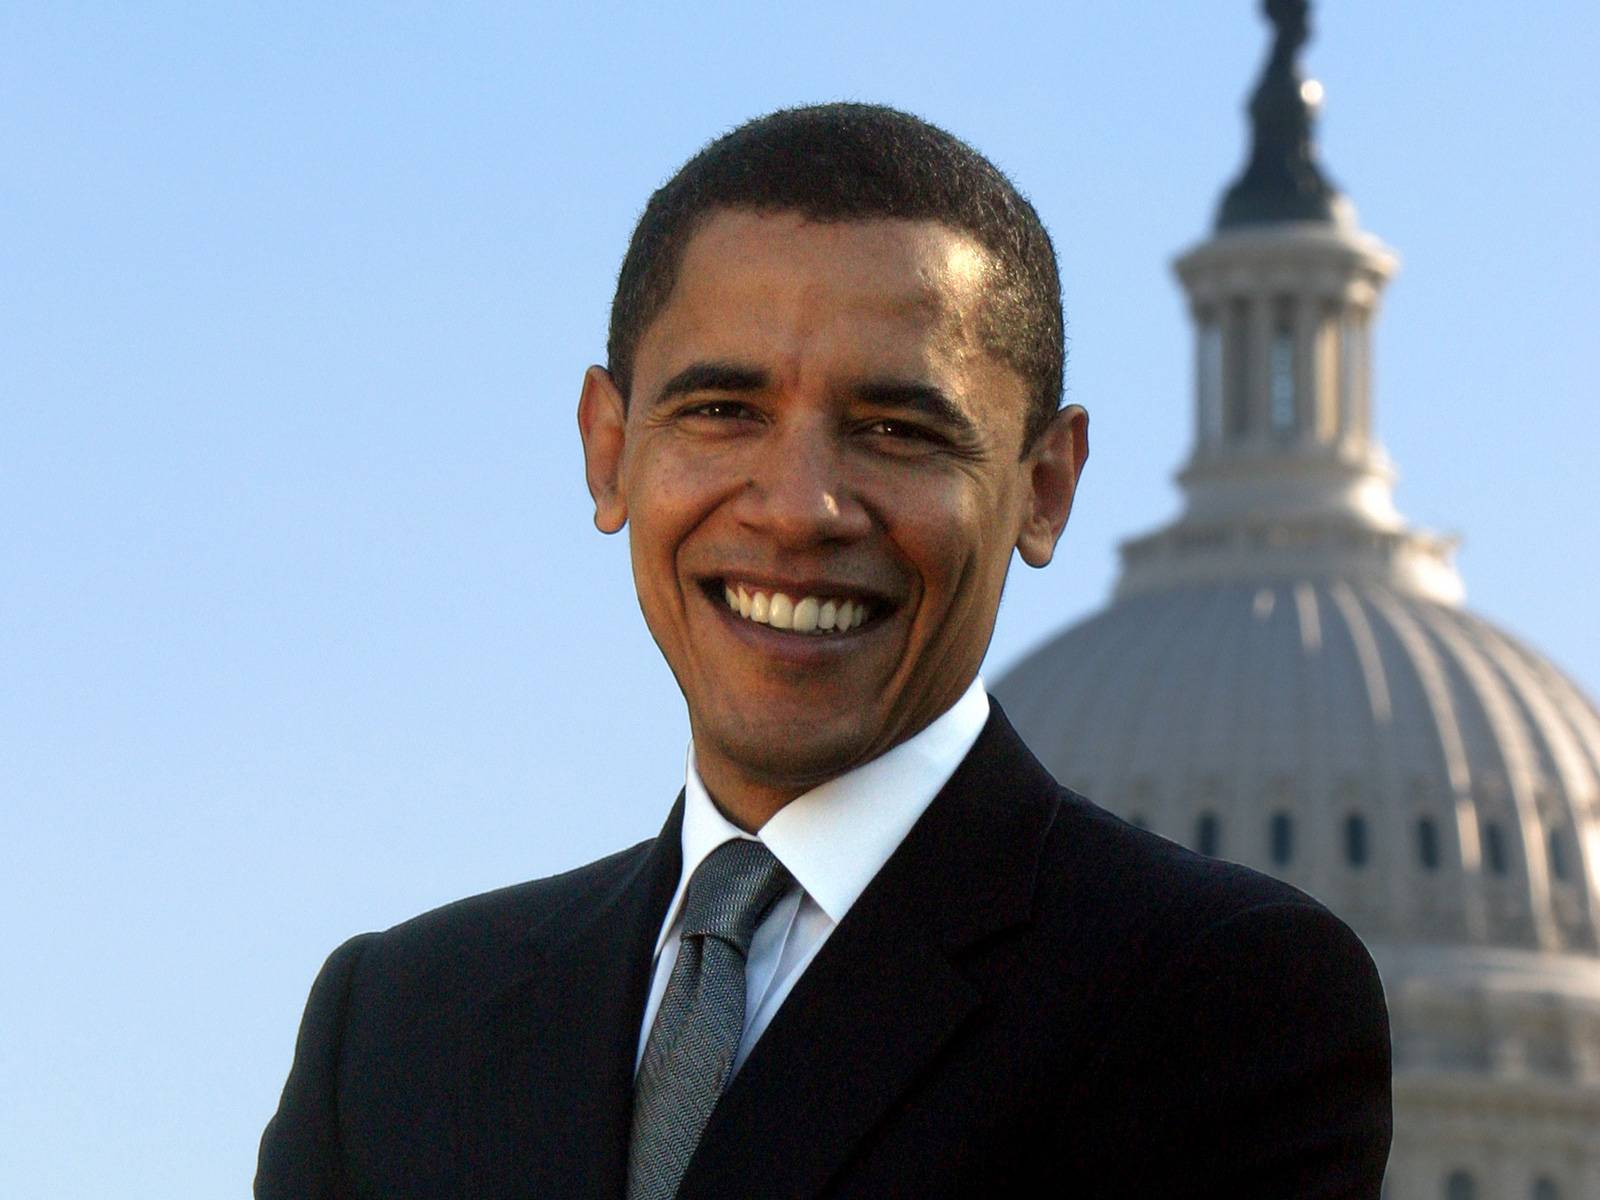 Wallpaper Of Barack Obama - Barack Obama In Front Of The White House - HD Wallpaper 